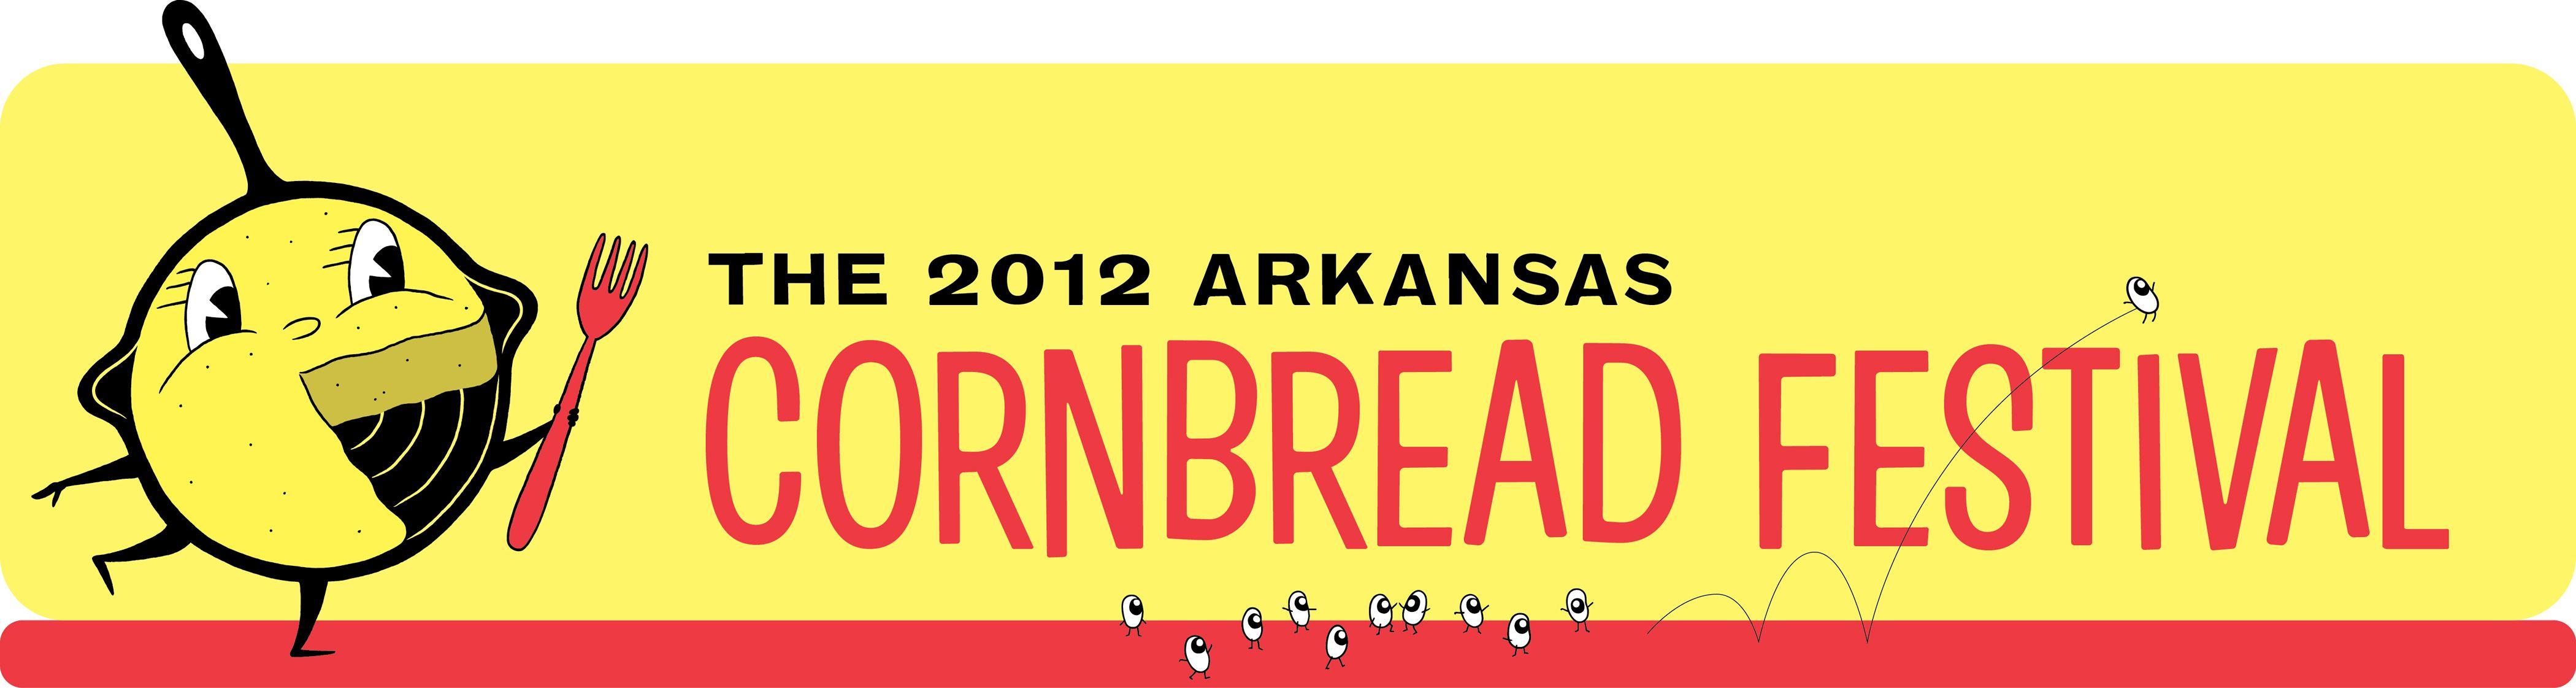 Cornbread Logo - Arkansas Cornbread Festival Cooks Up New Logo, Website. What Have